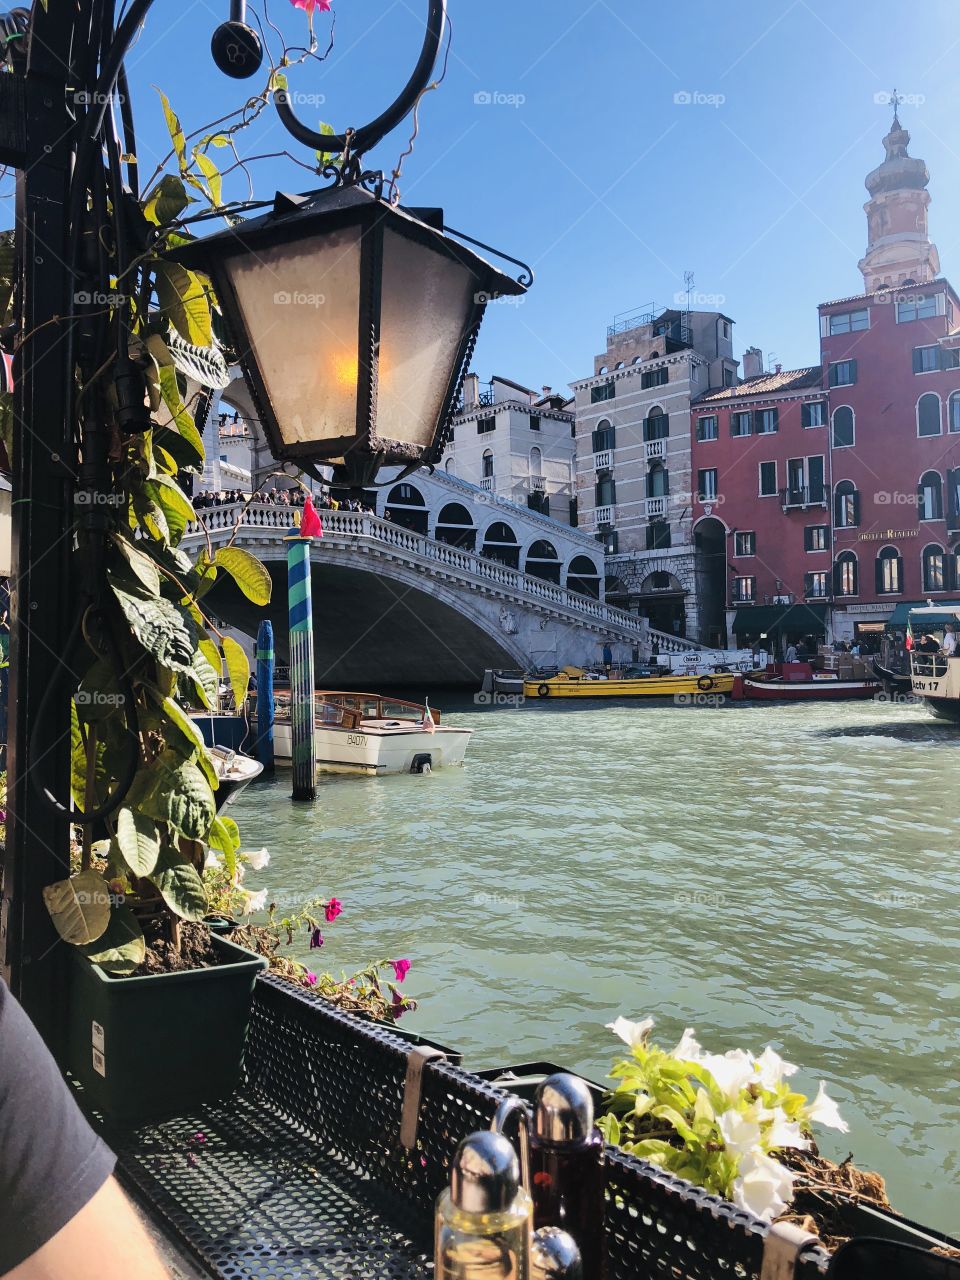 Venice - Rialto Bridge